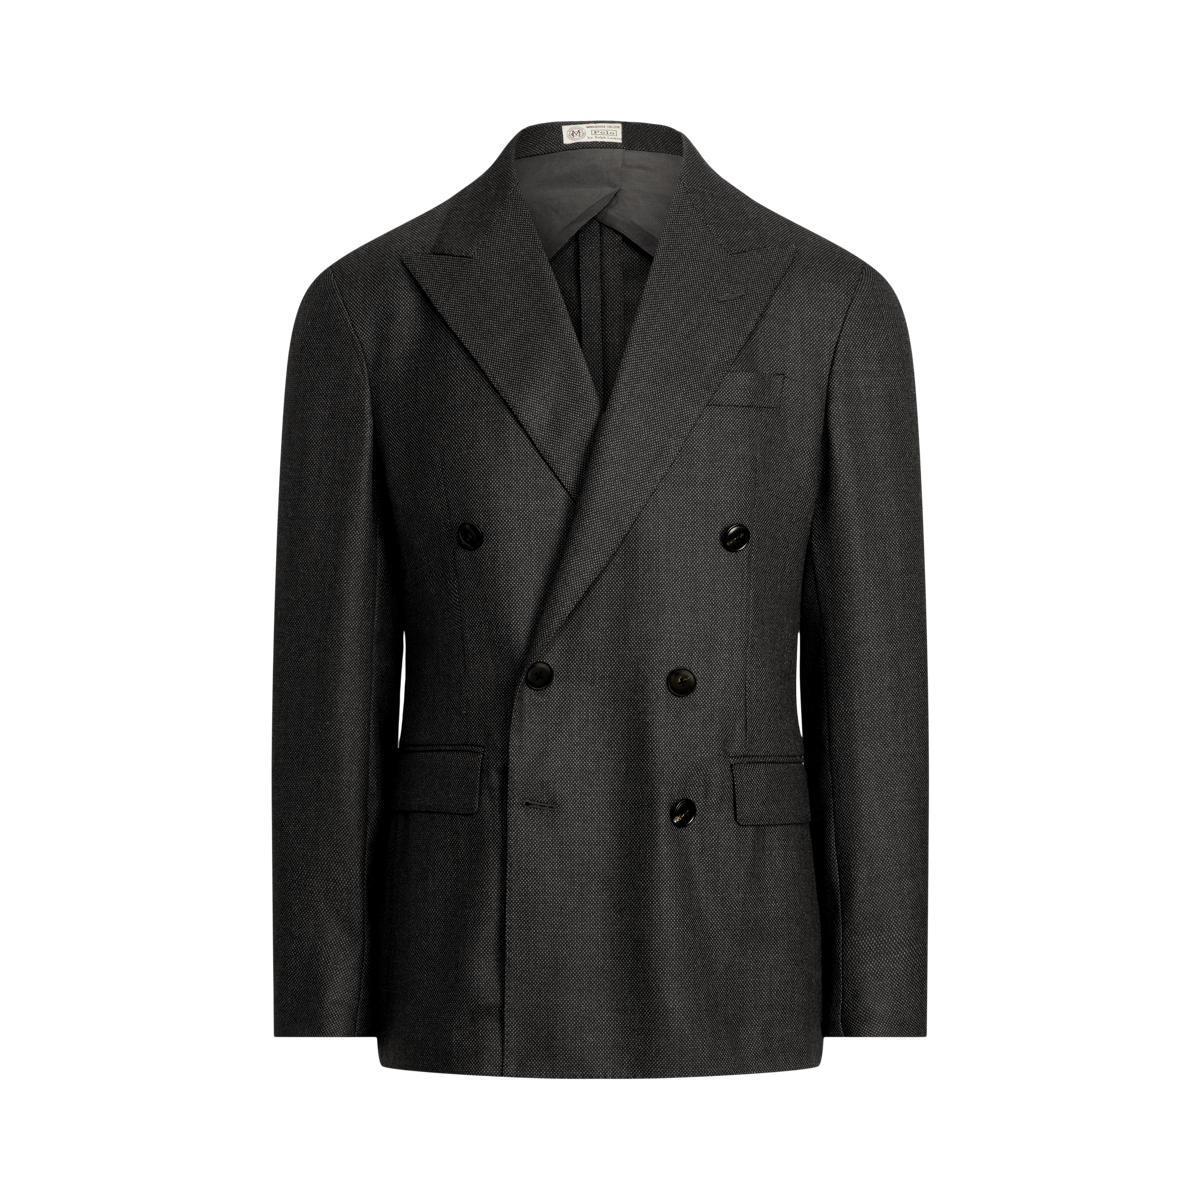 The Morehouse Collection Suit Jacket | Ralph Lauren